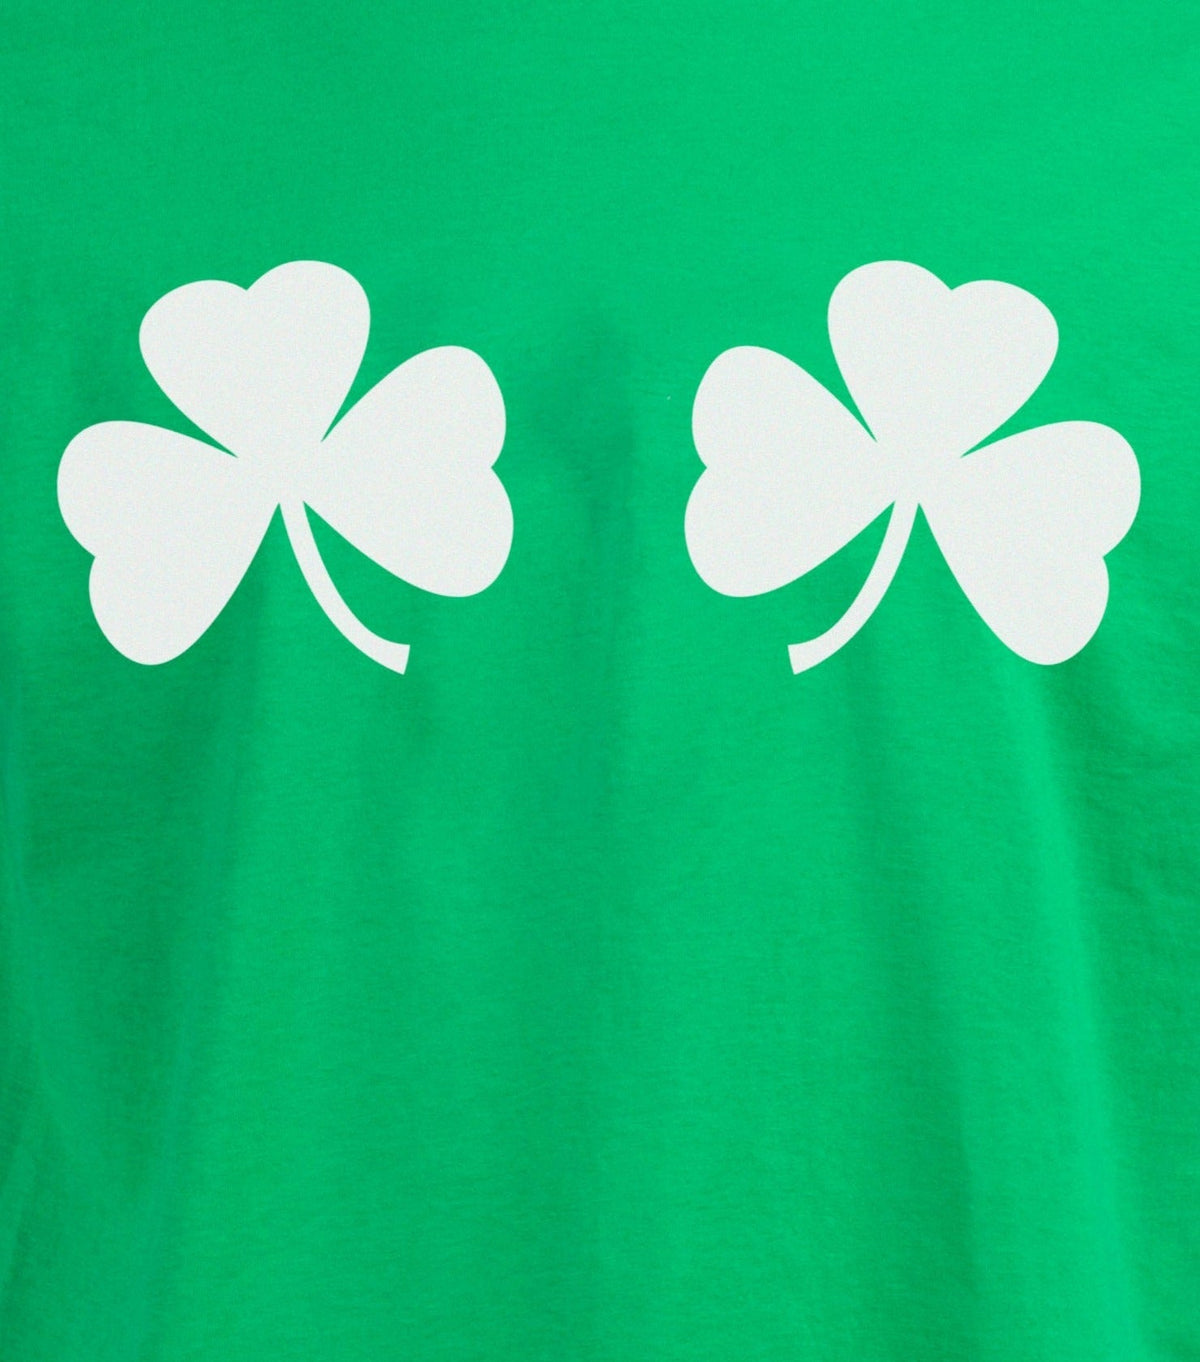 Nice Shamrocks - St. Patrick's Day Raunchy Humor Sex Party T-shirt - Women's